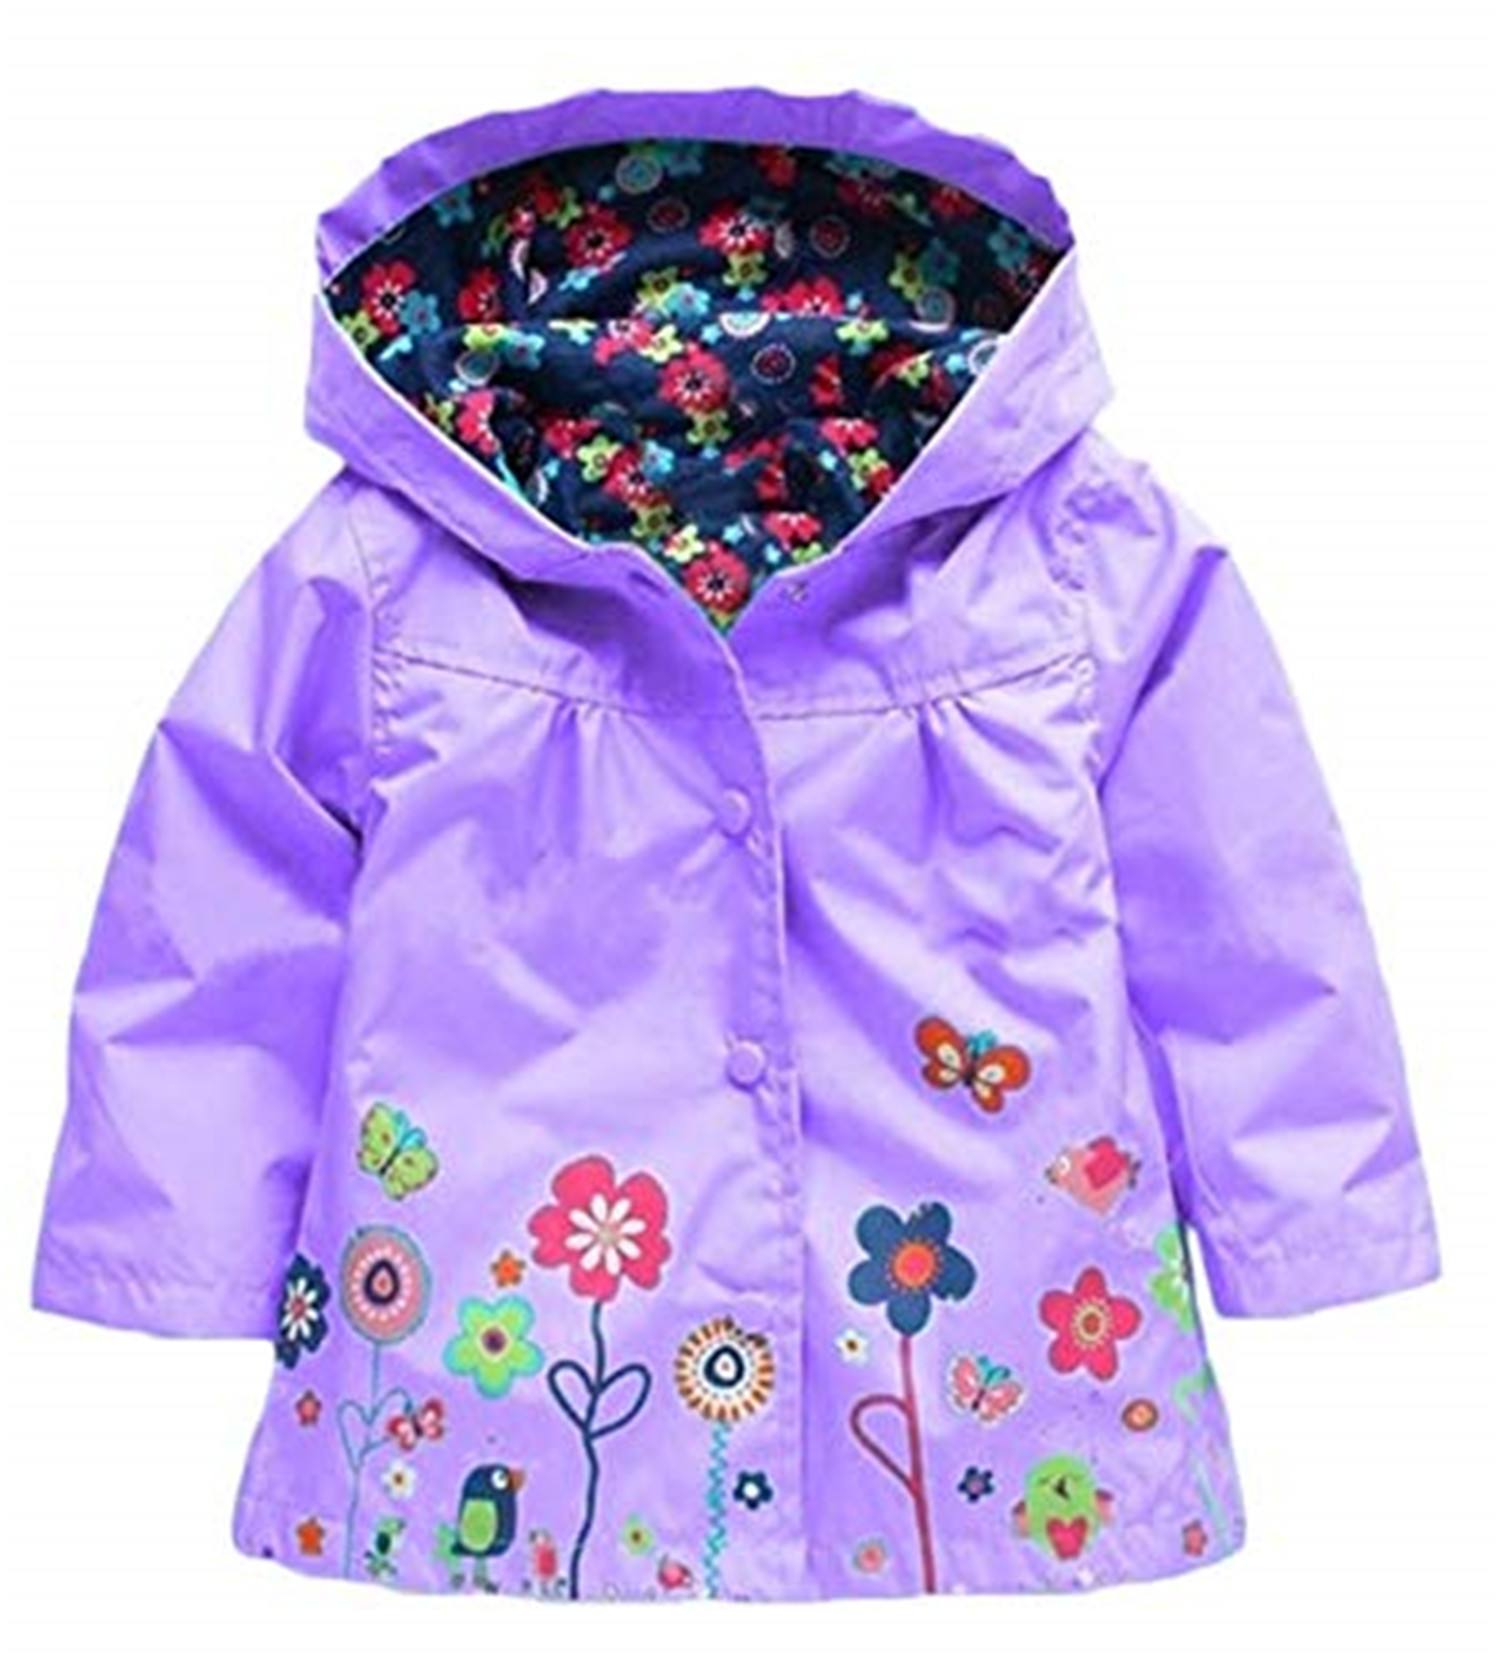 Kiapeise Kids Children Girl Flowers Hooded Waterproof Windproof Raincoat Jacket Outwear - image 2 of 4